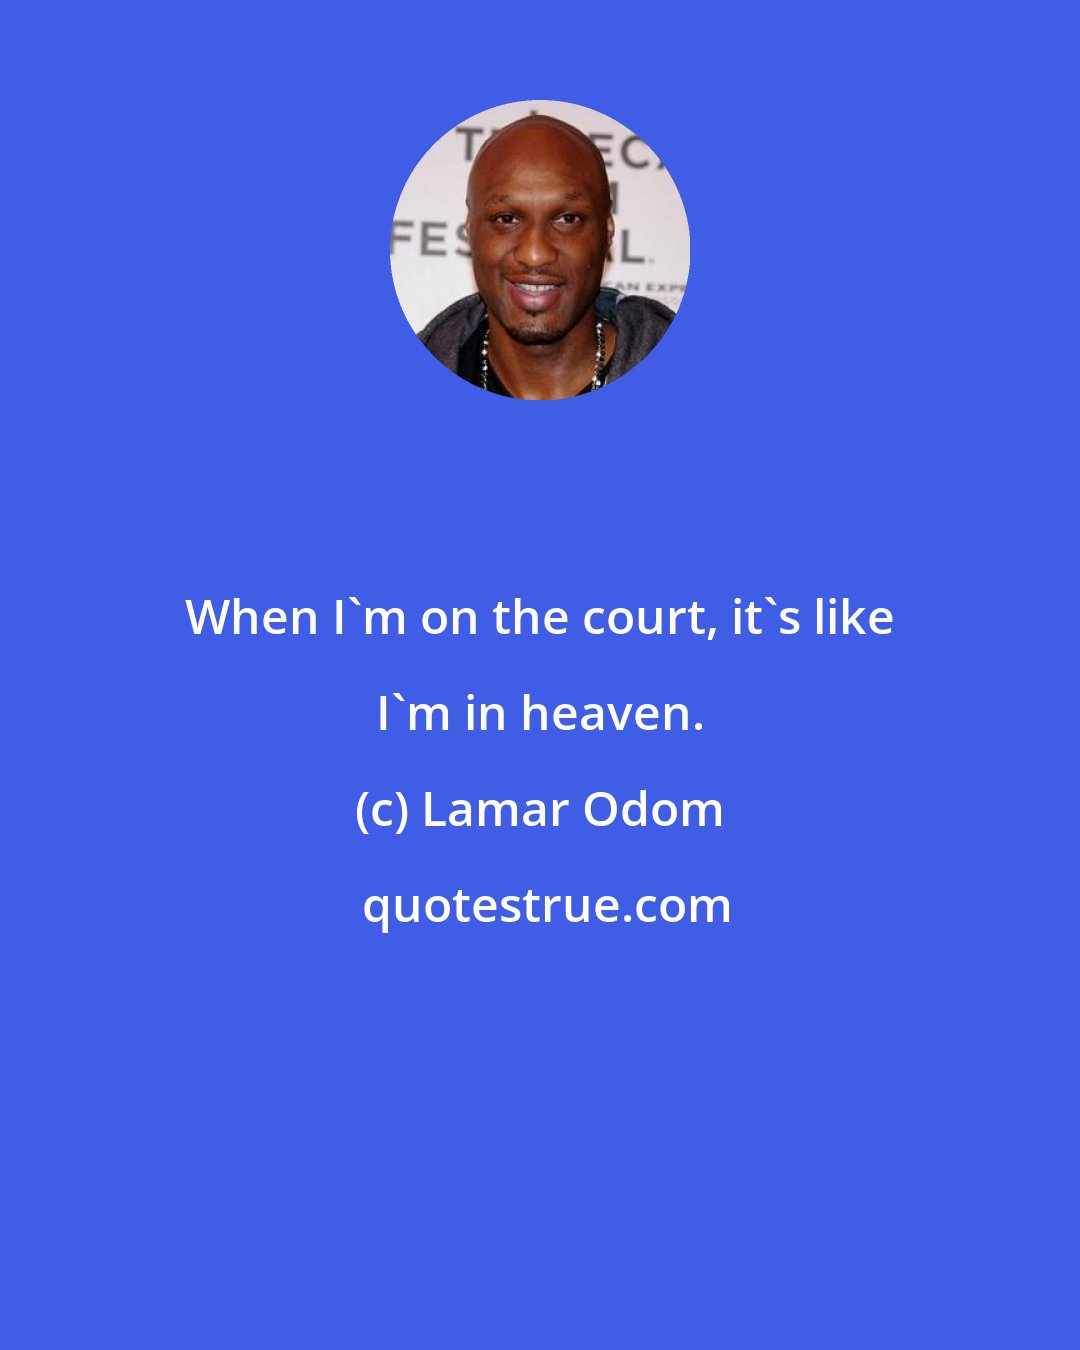 Lamar Odom: When I'm on the court, it's like I'm in heaven.